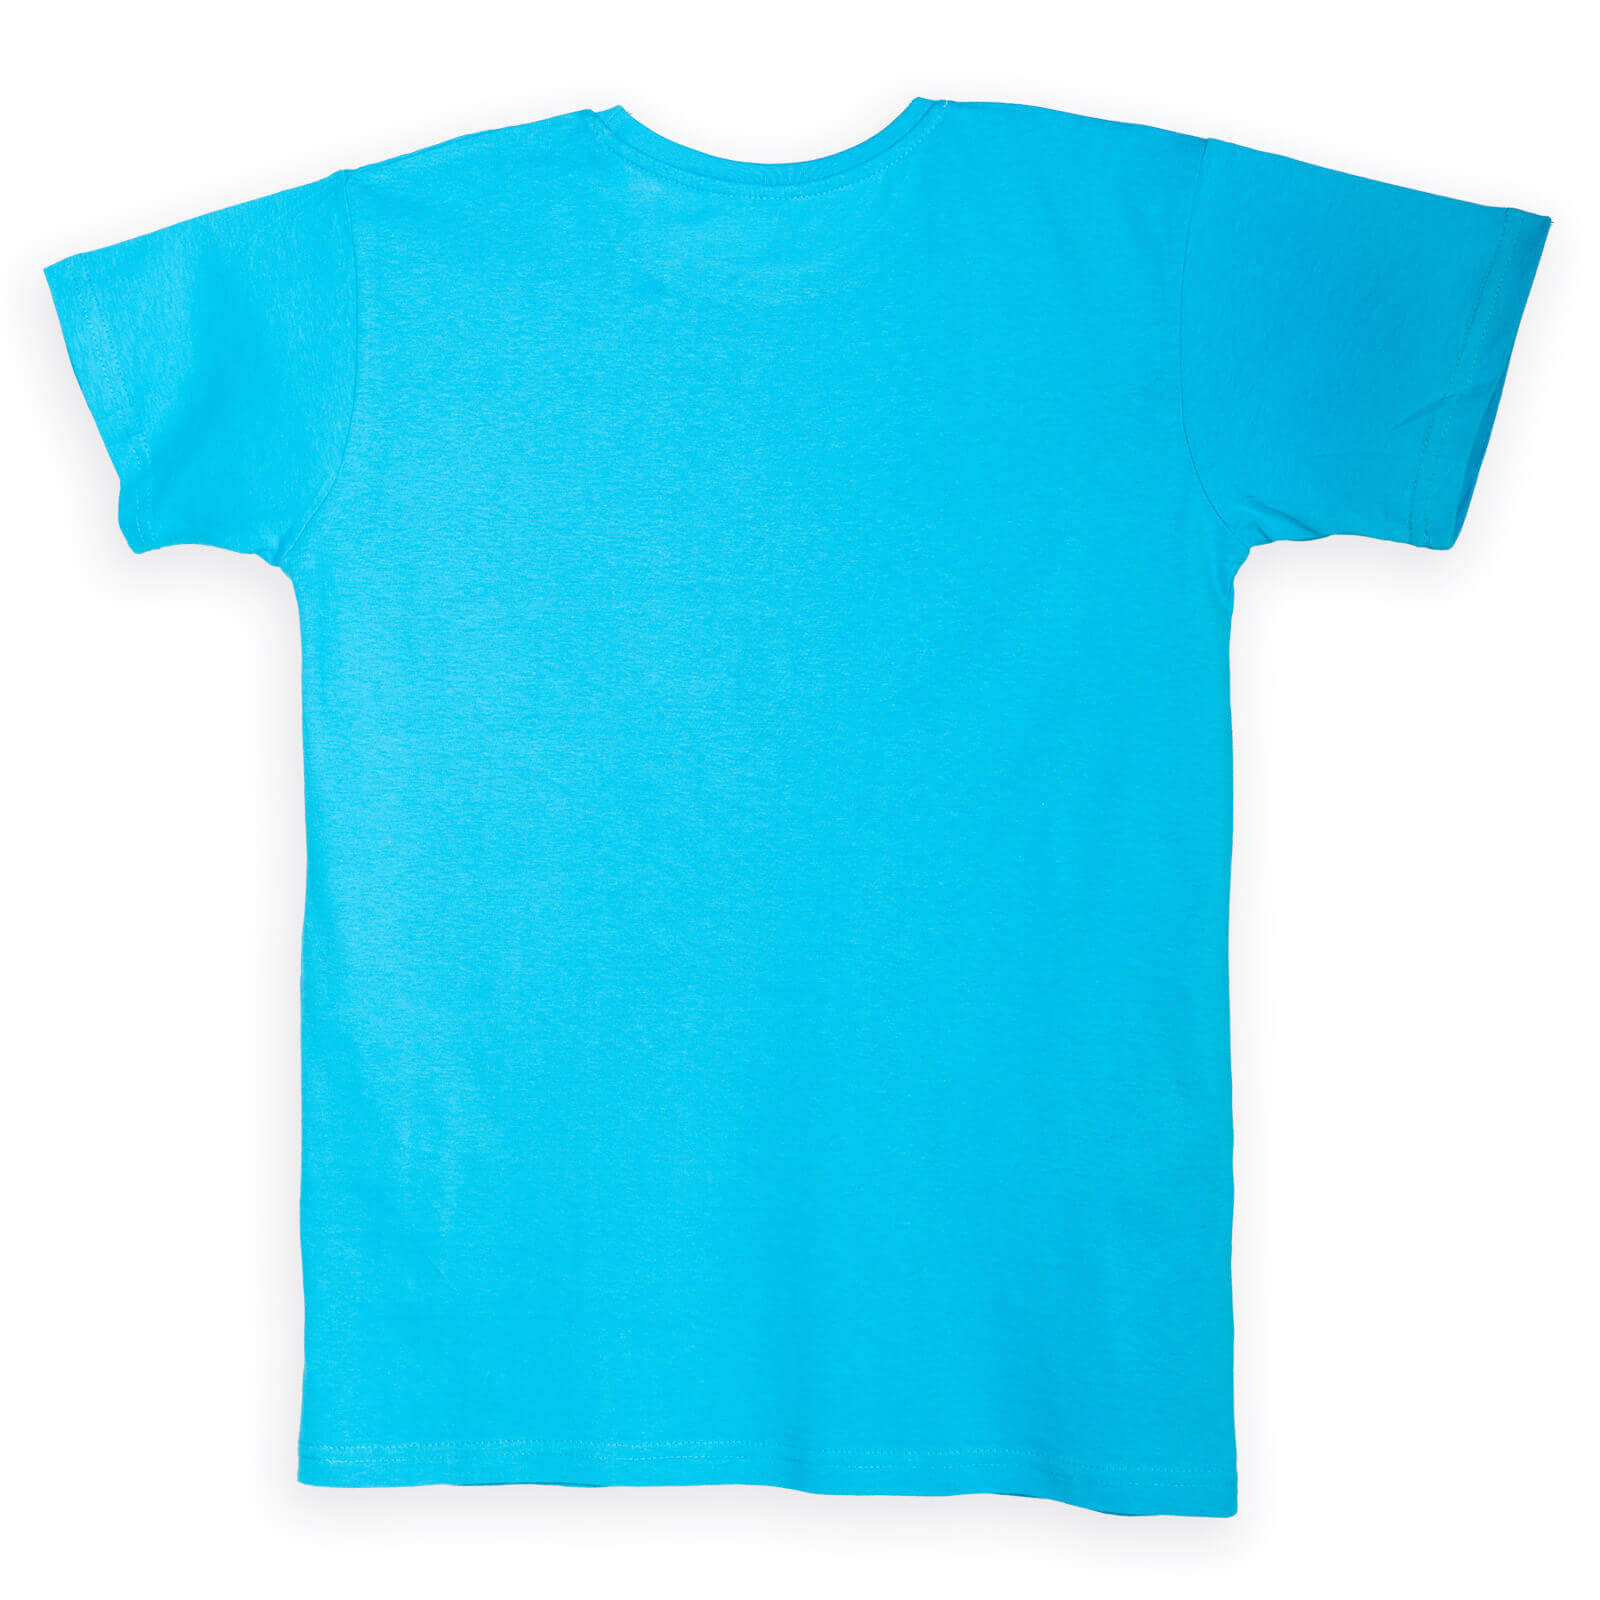 T-shirt kids, turquoise, 100% cotton